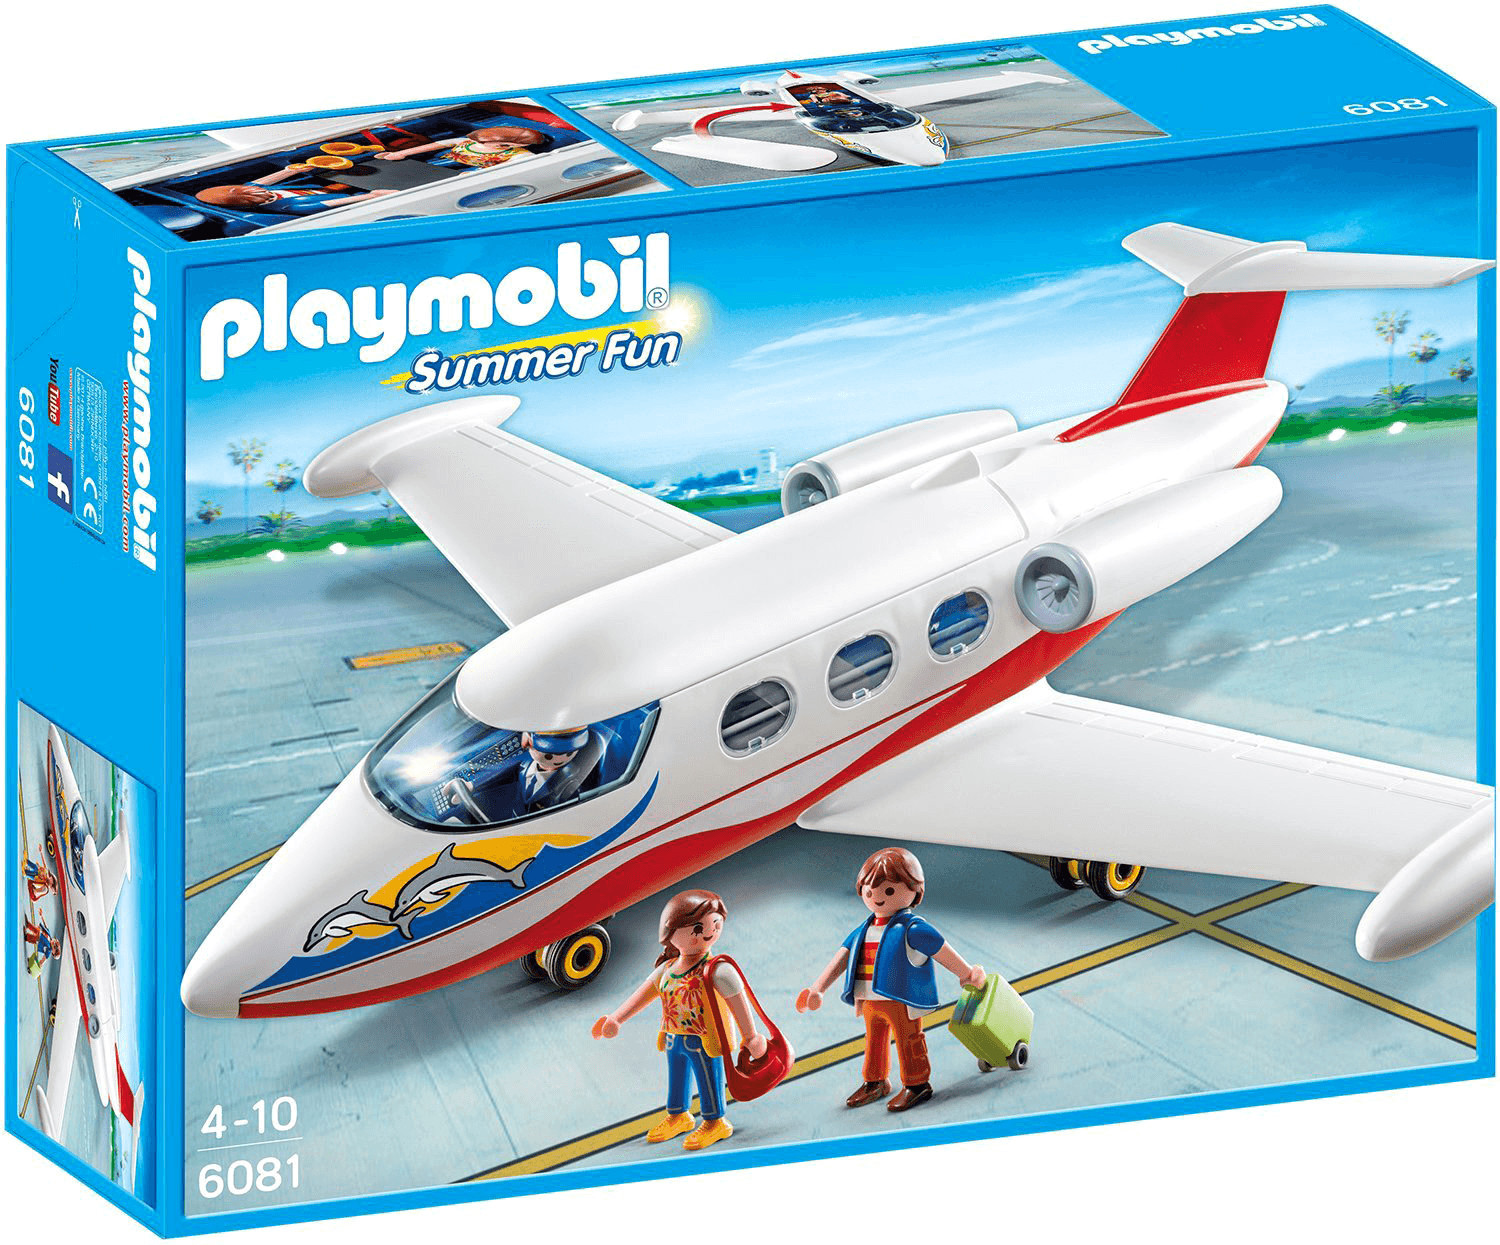 Playmobil Ferienflieger (6081)